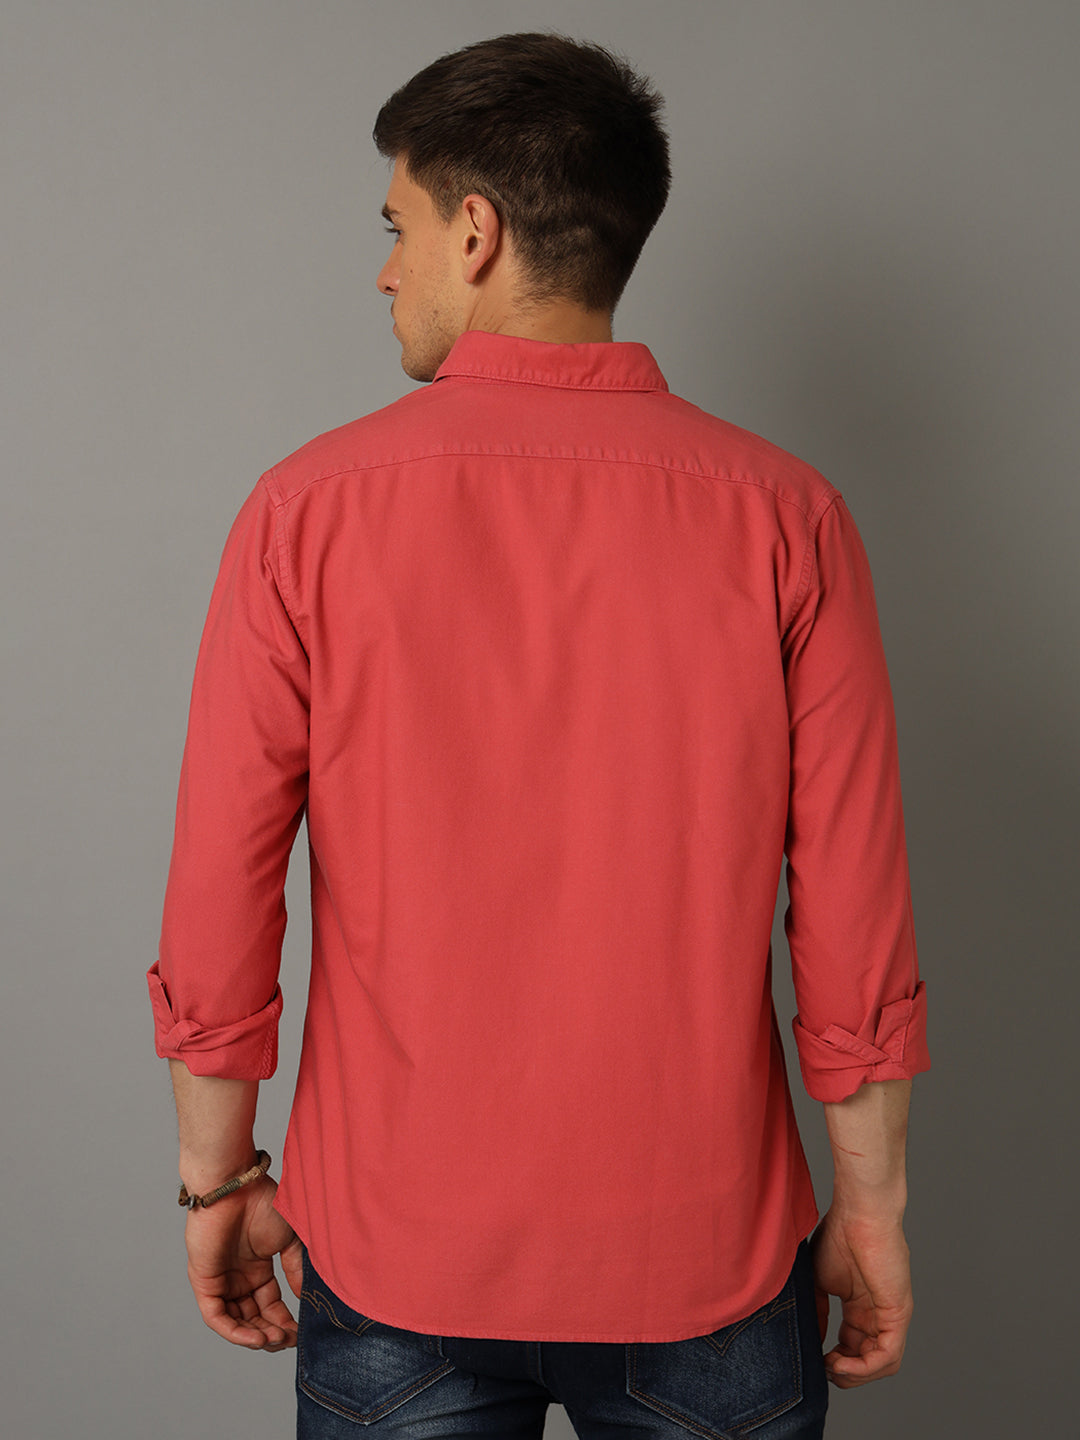 Aldeno Men Solid Casual Pink Shirt